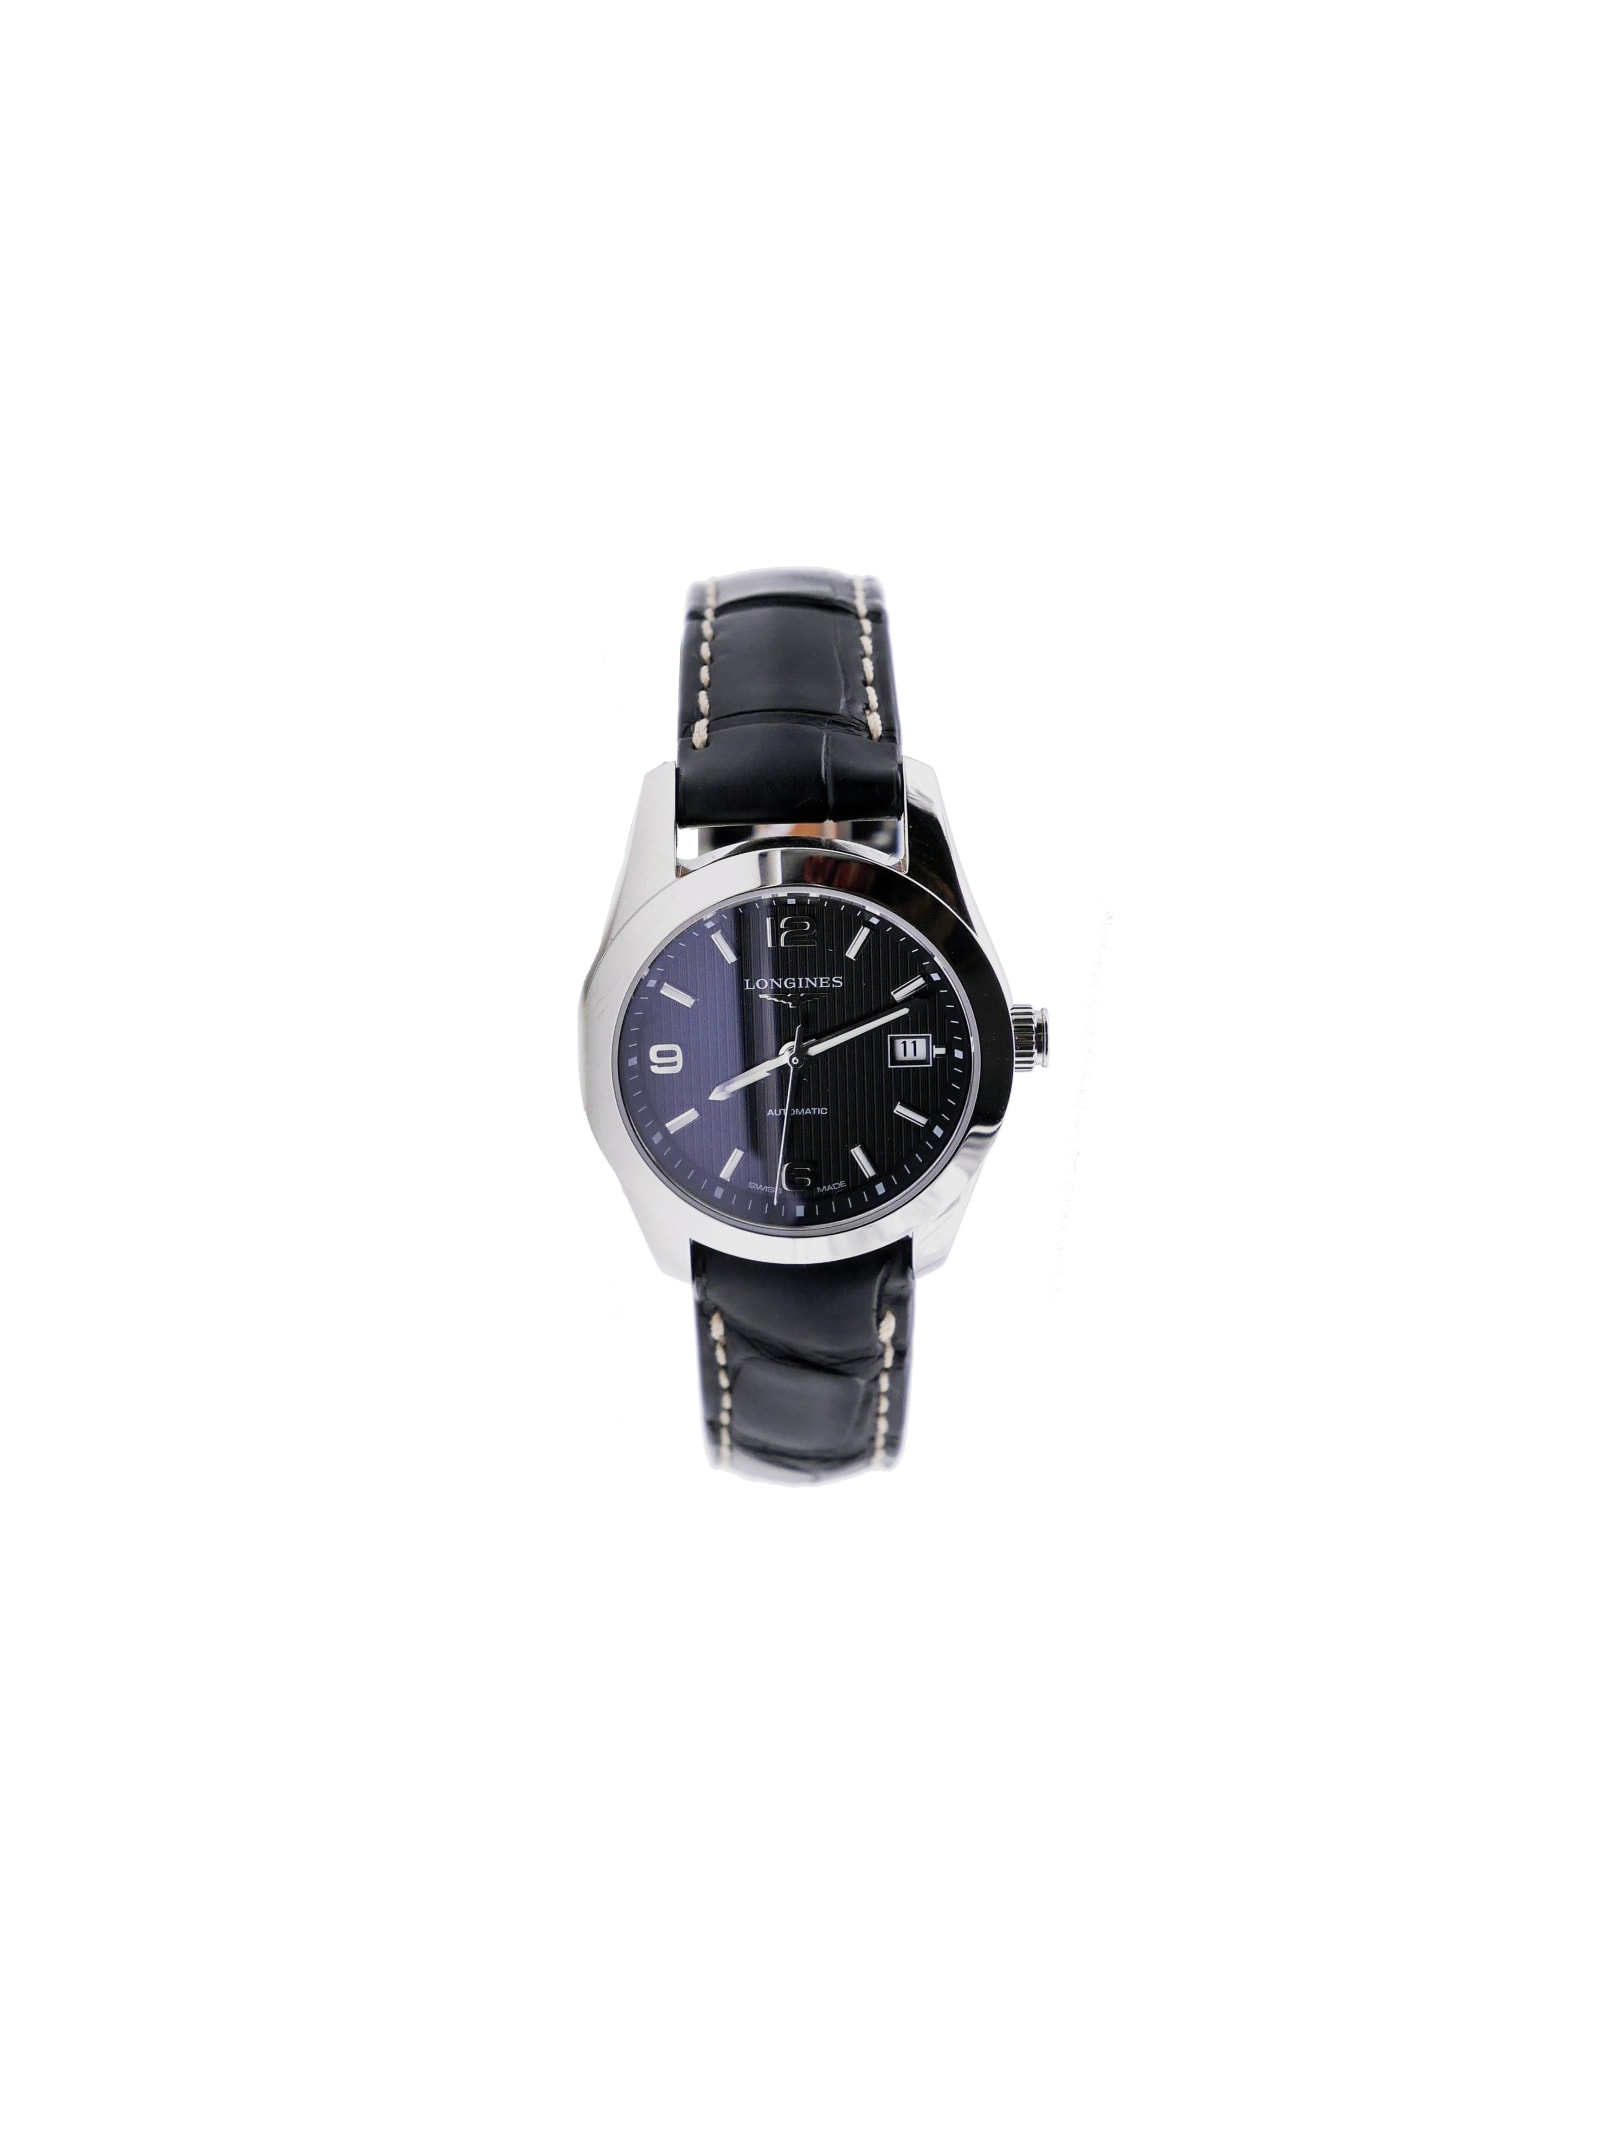 Longines L22854563 Conquest Classic Watches